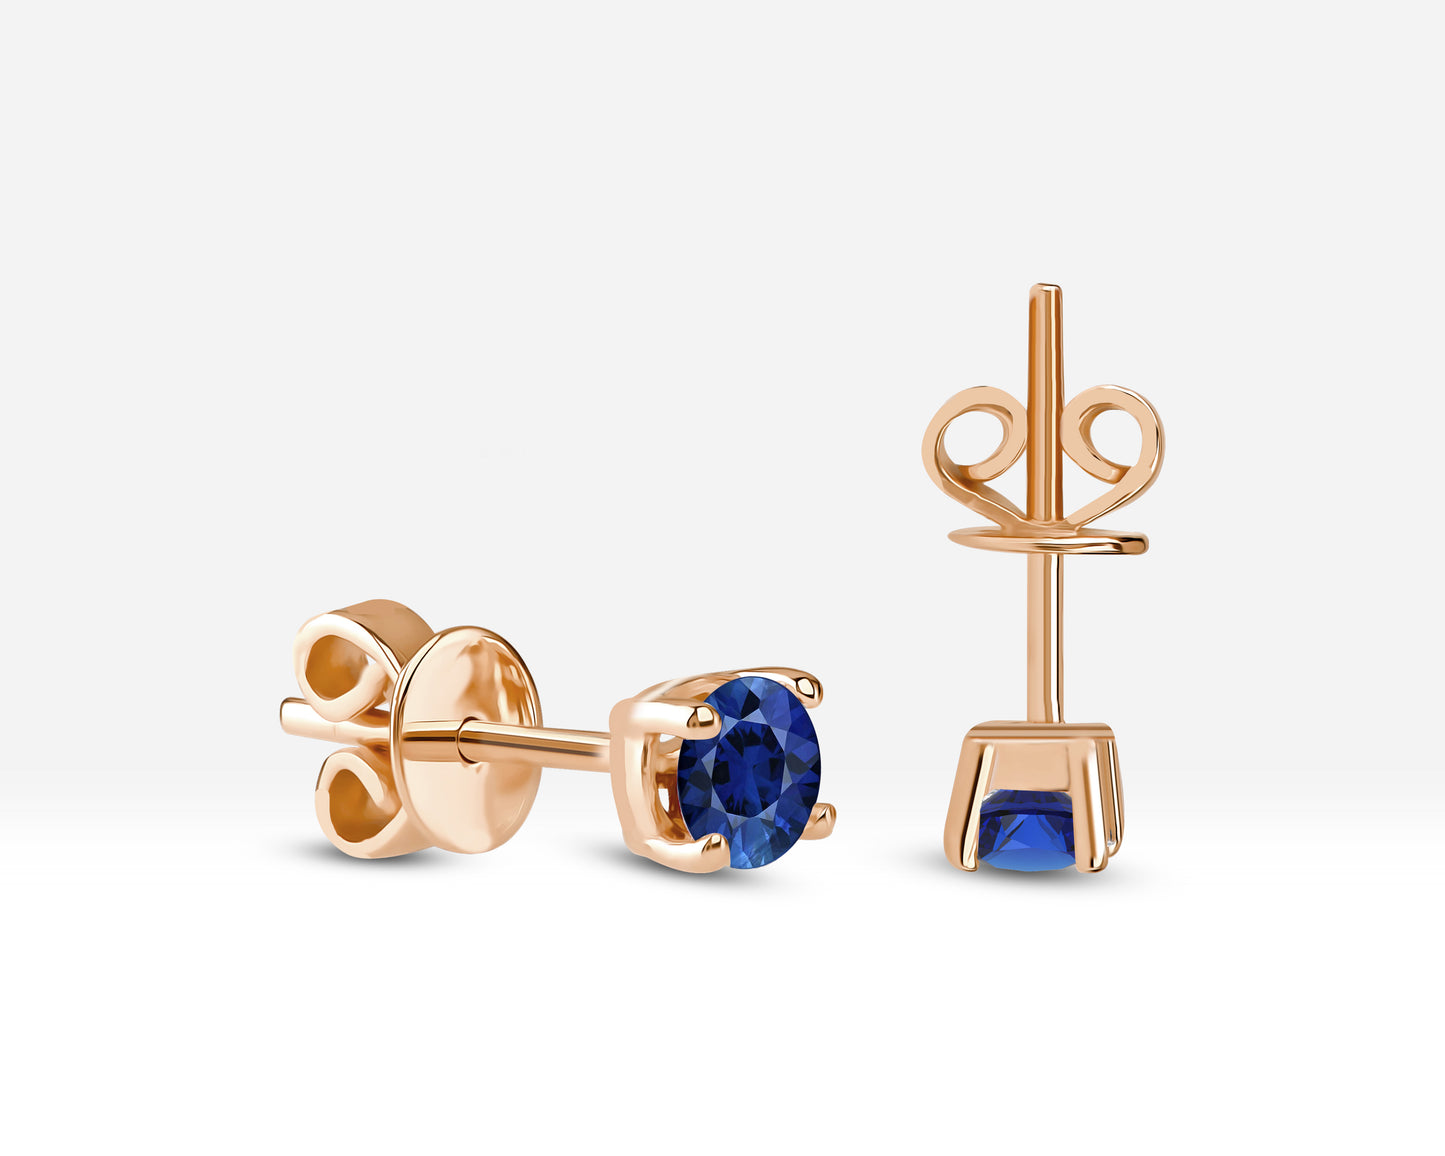 Sapphire Stud Earrings in 14K Solid Gold, Pair Earring